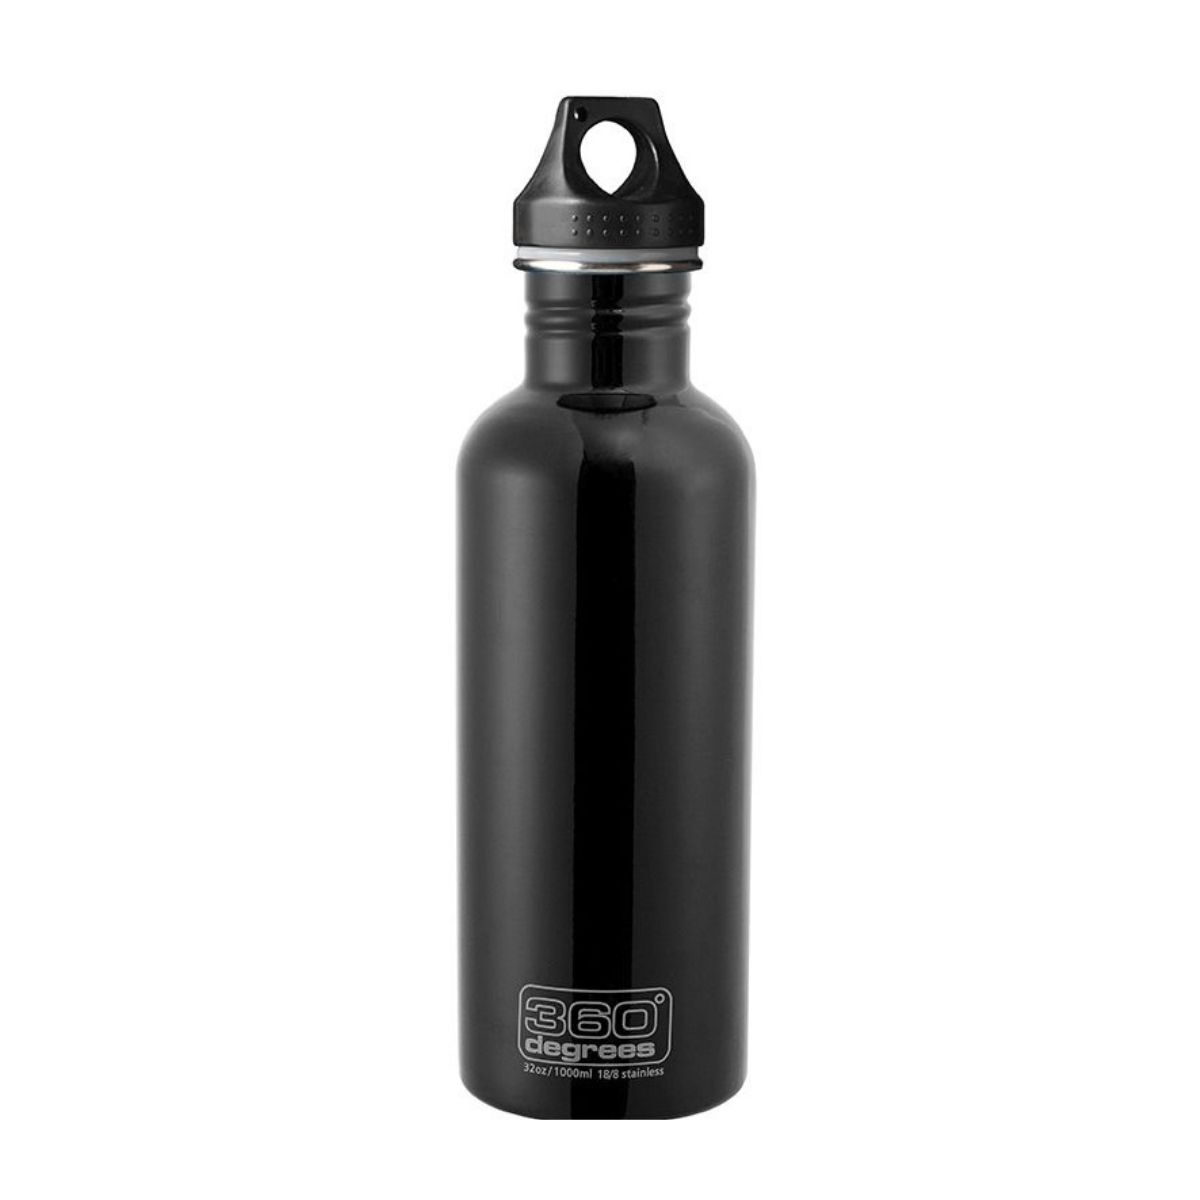 360° - Stainless Steel - Water bottle